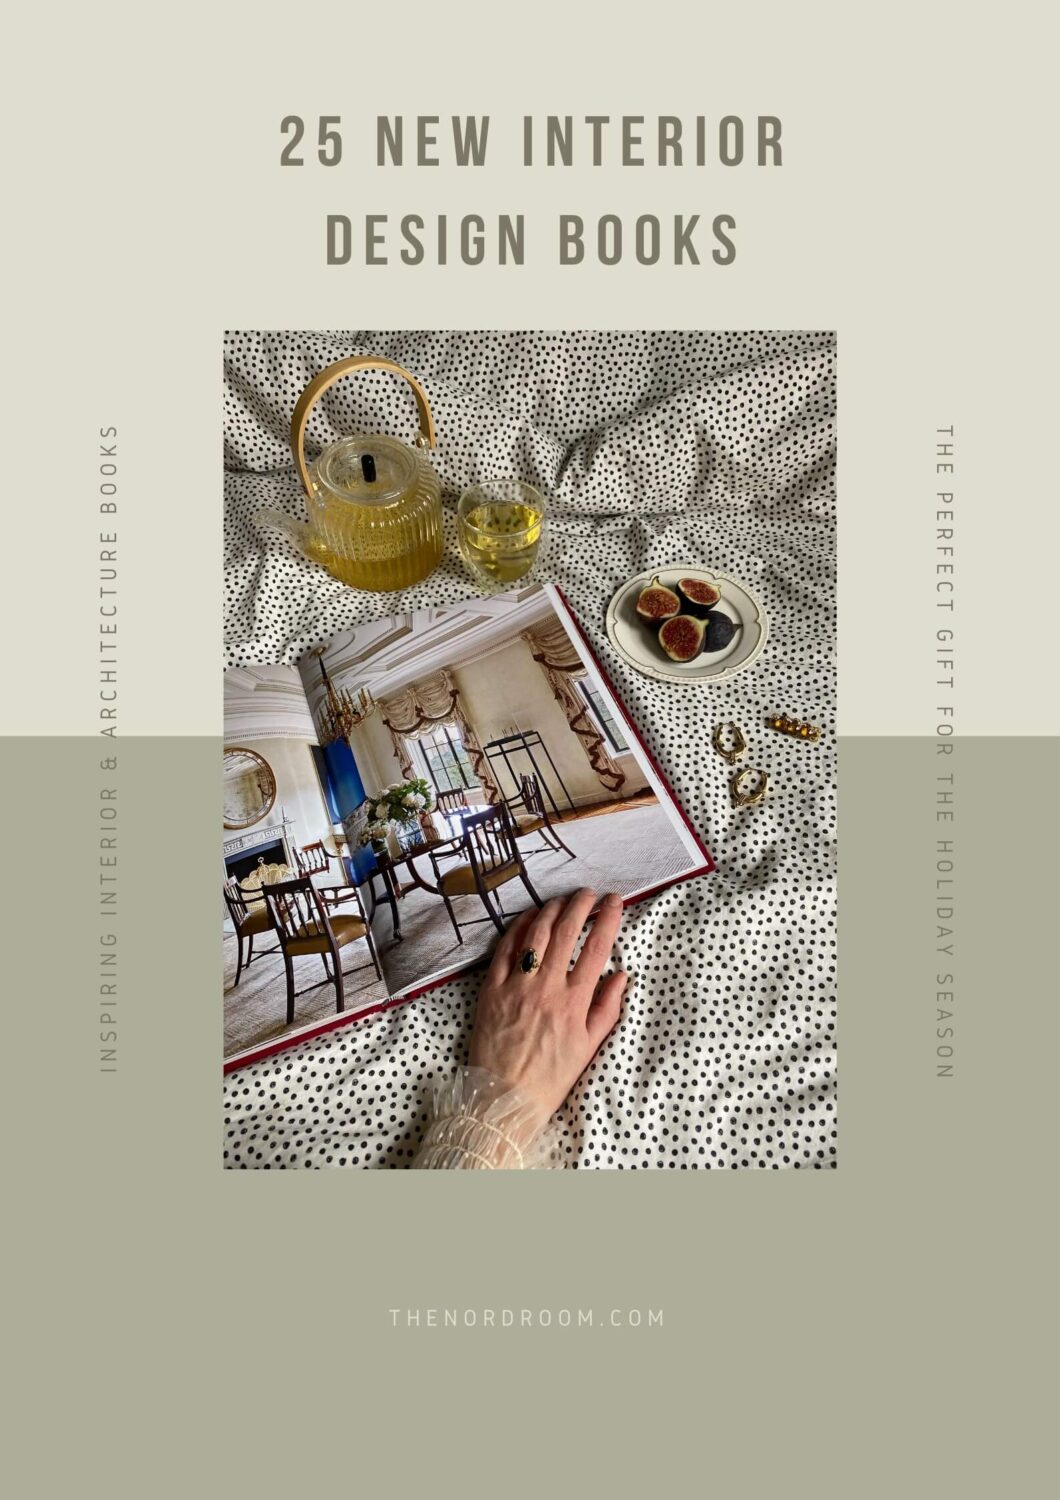 interior architecture books nordroom 25 New Interior Design Books - October 2021